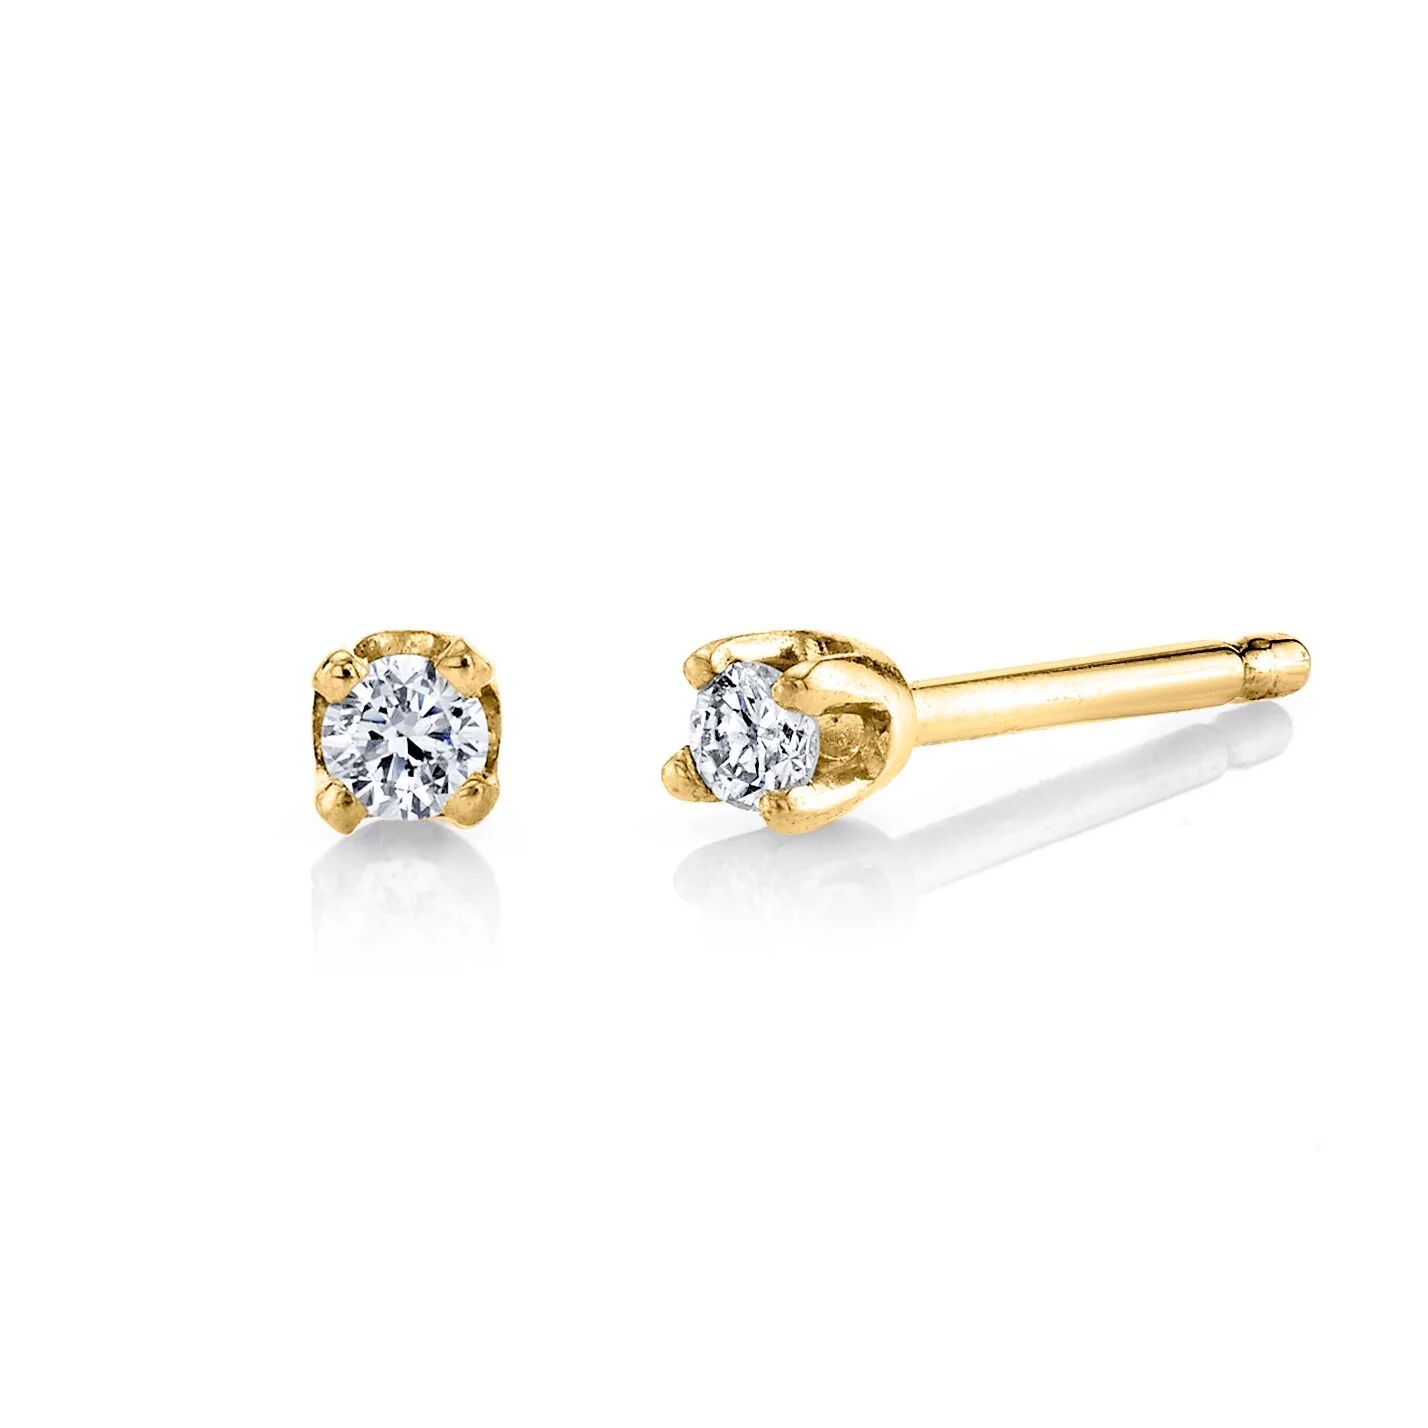 MINI DIAMOND EARRINGS | Starling Jewelry